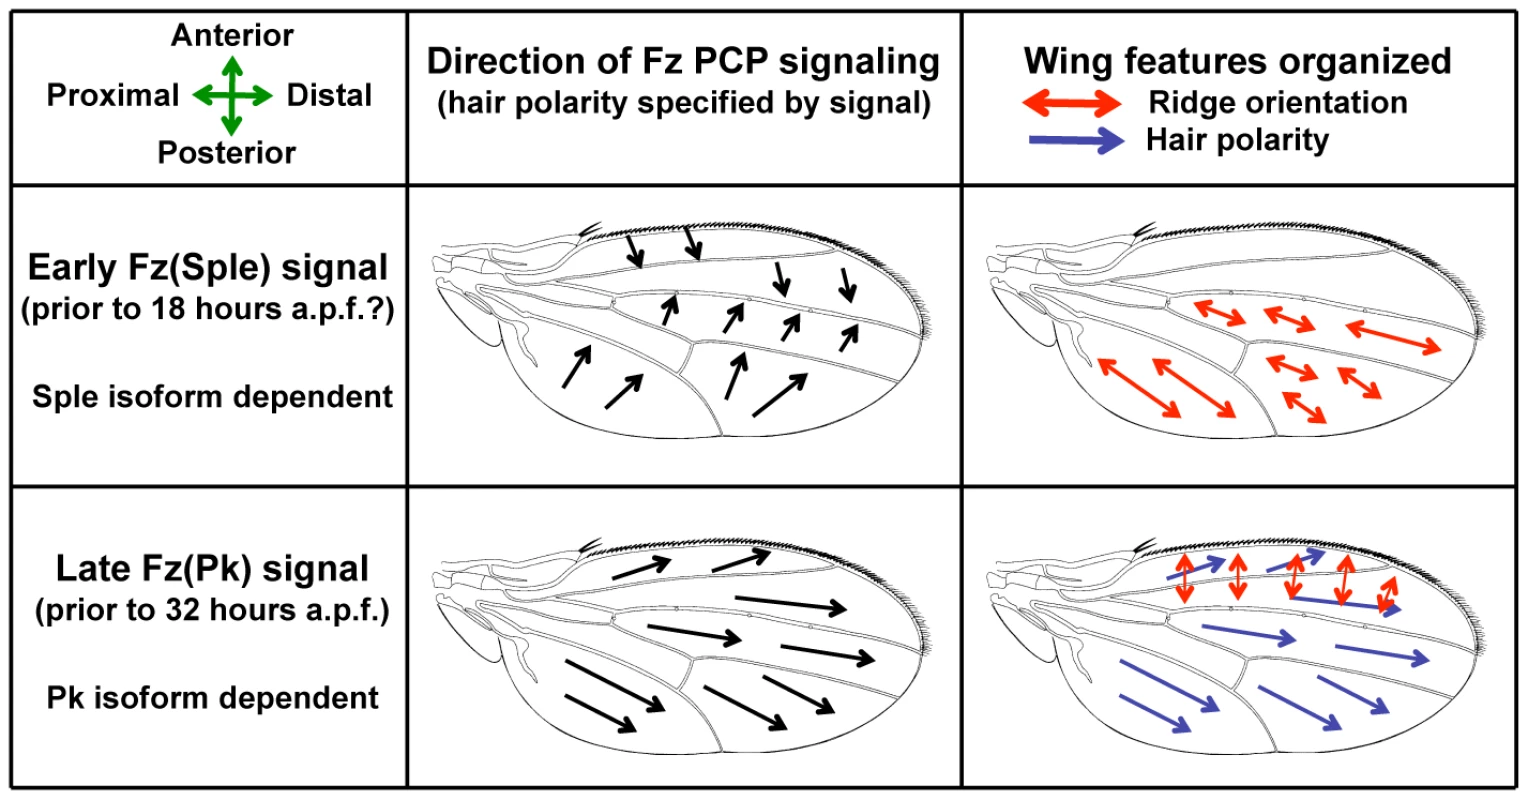 A Bidirectional-Biphasic (Bid-Bip) model for Fz PCP signaling in the <i>Drosophila</i> wing.